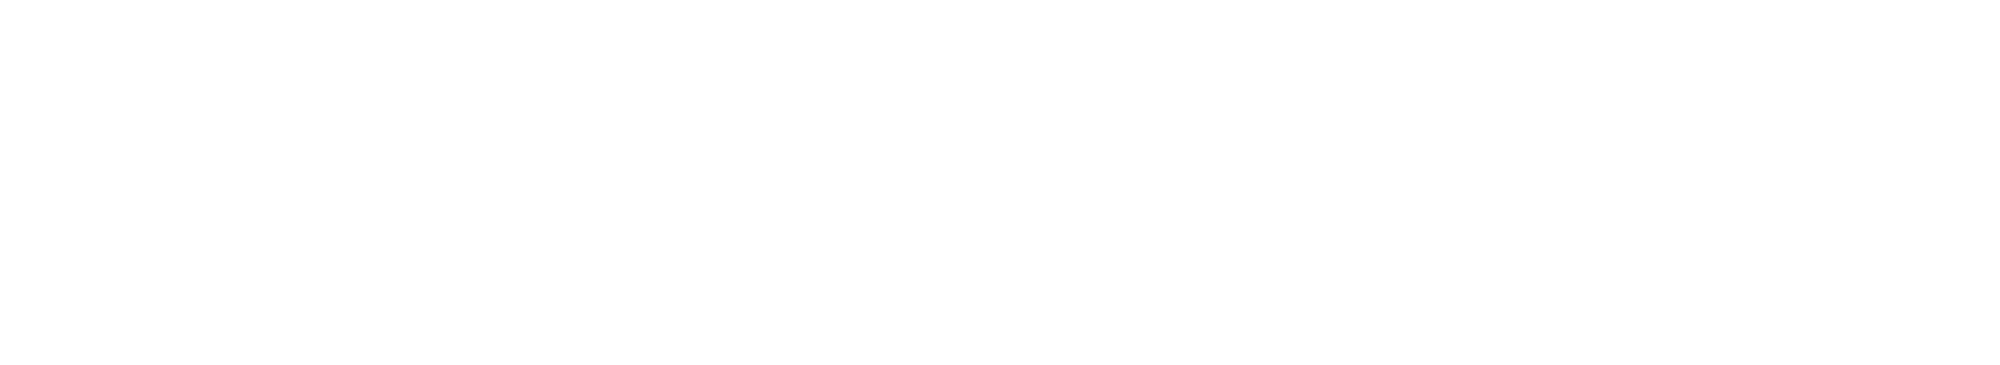 ecoloop GmbH Logo